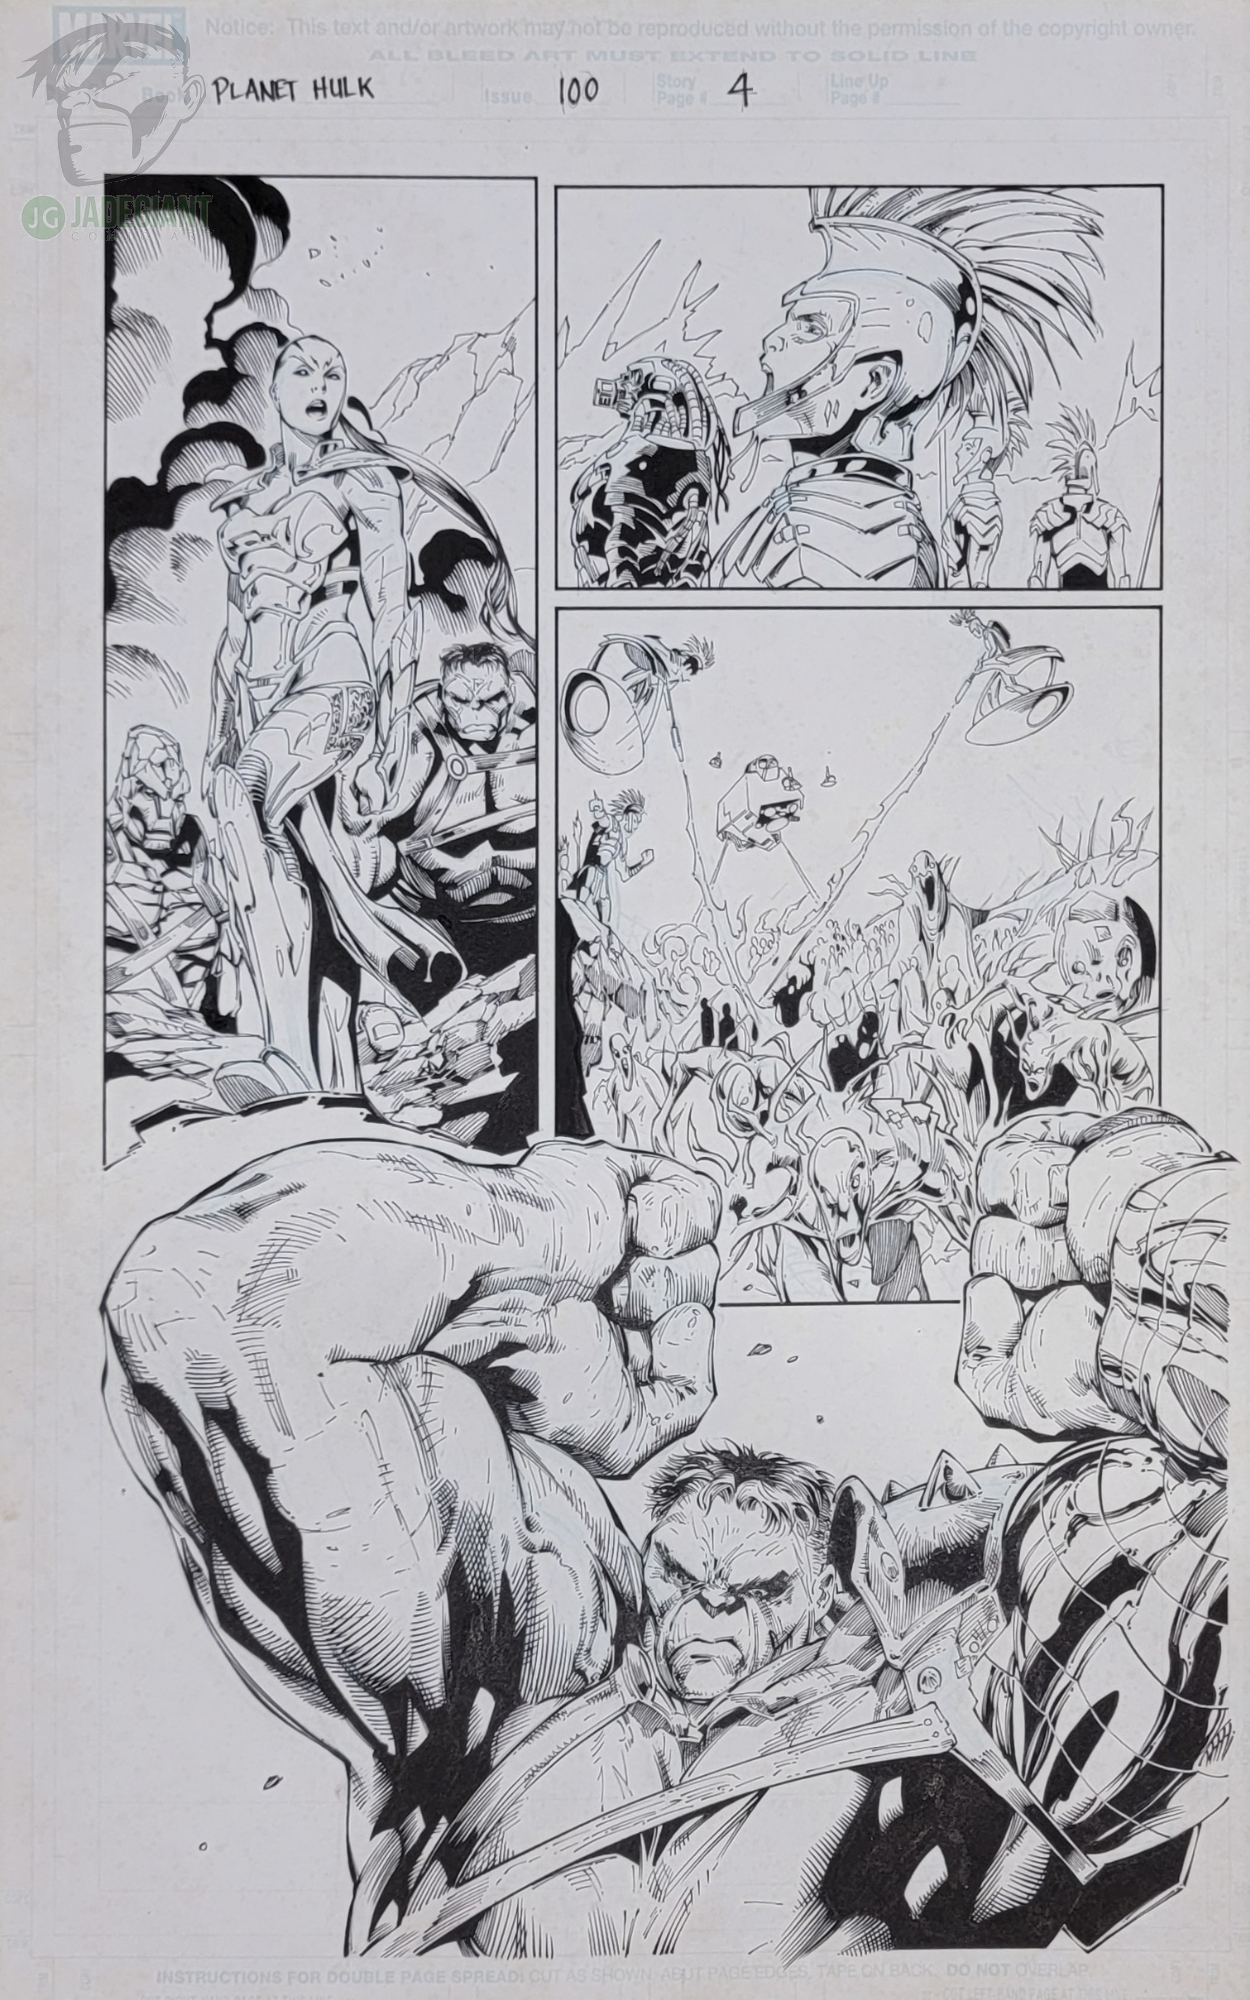 2007 Incredible Hulk Vol 2 Issue 100 page 4 Planet Hulk Carlo Pagulayan Comic Art